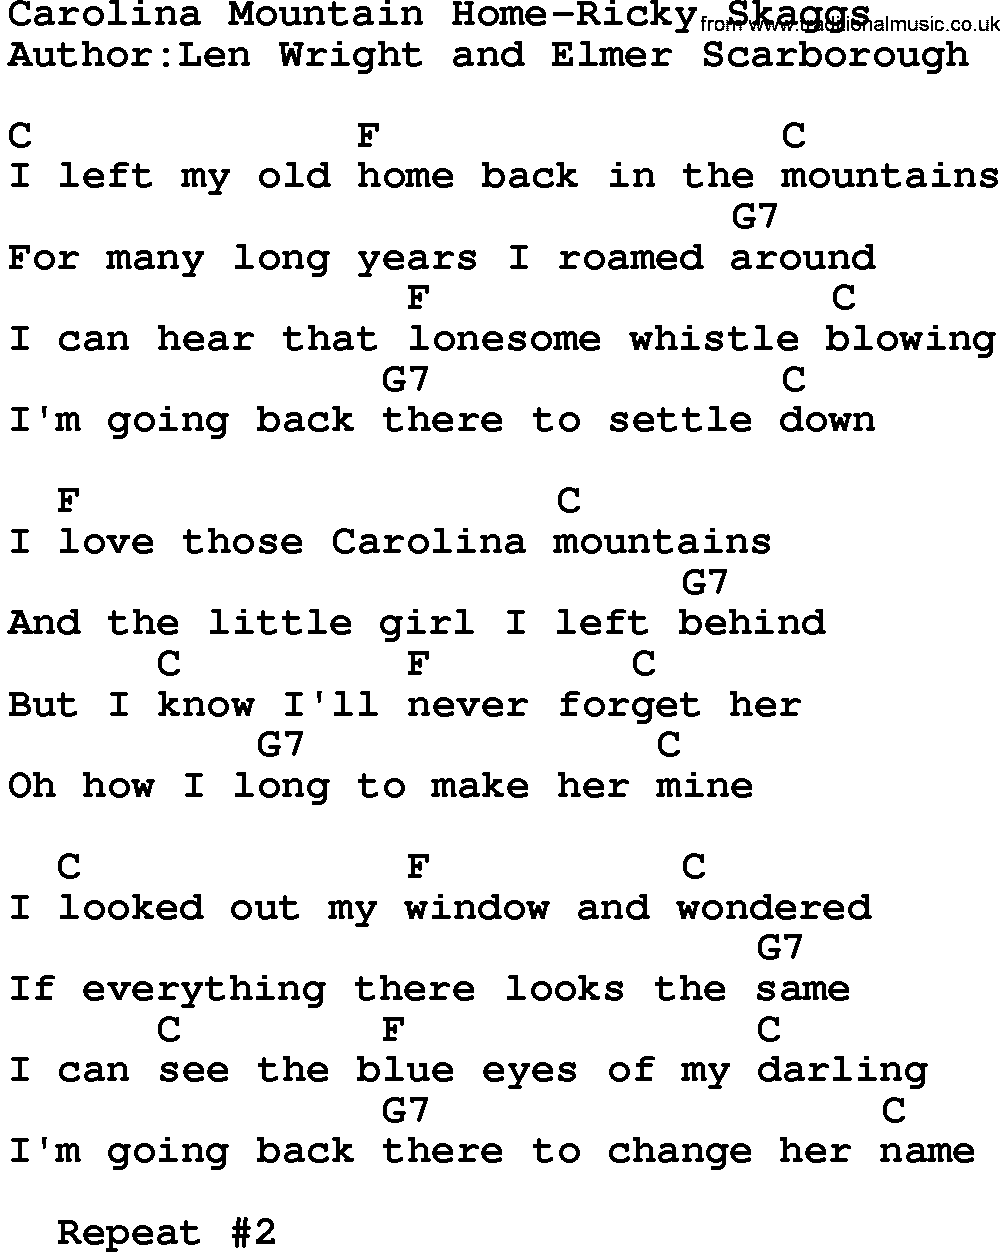 Country music song: Carolina Mountain Home-Ricky Skaggs lyrics and chords